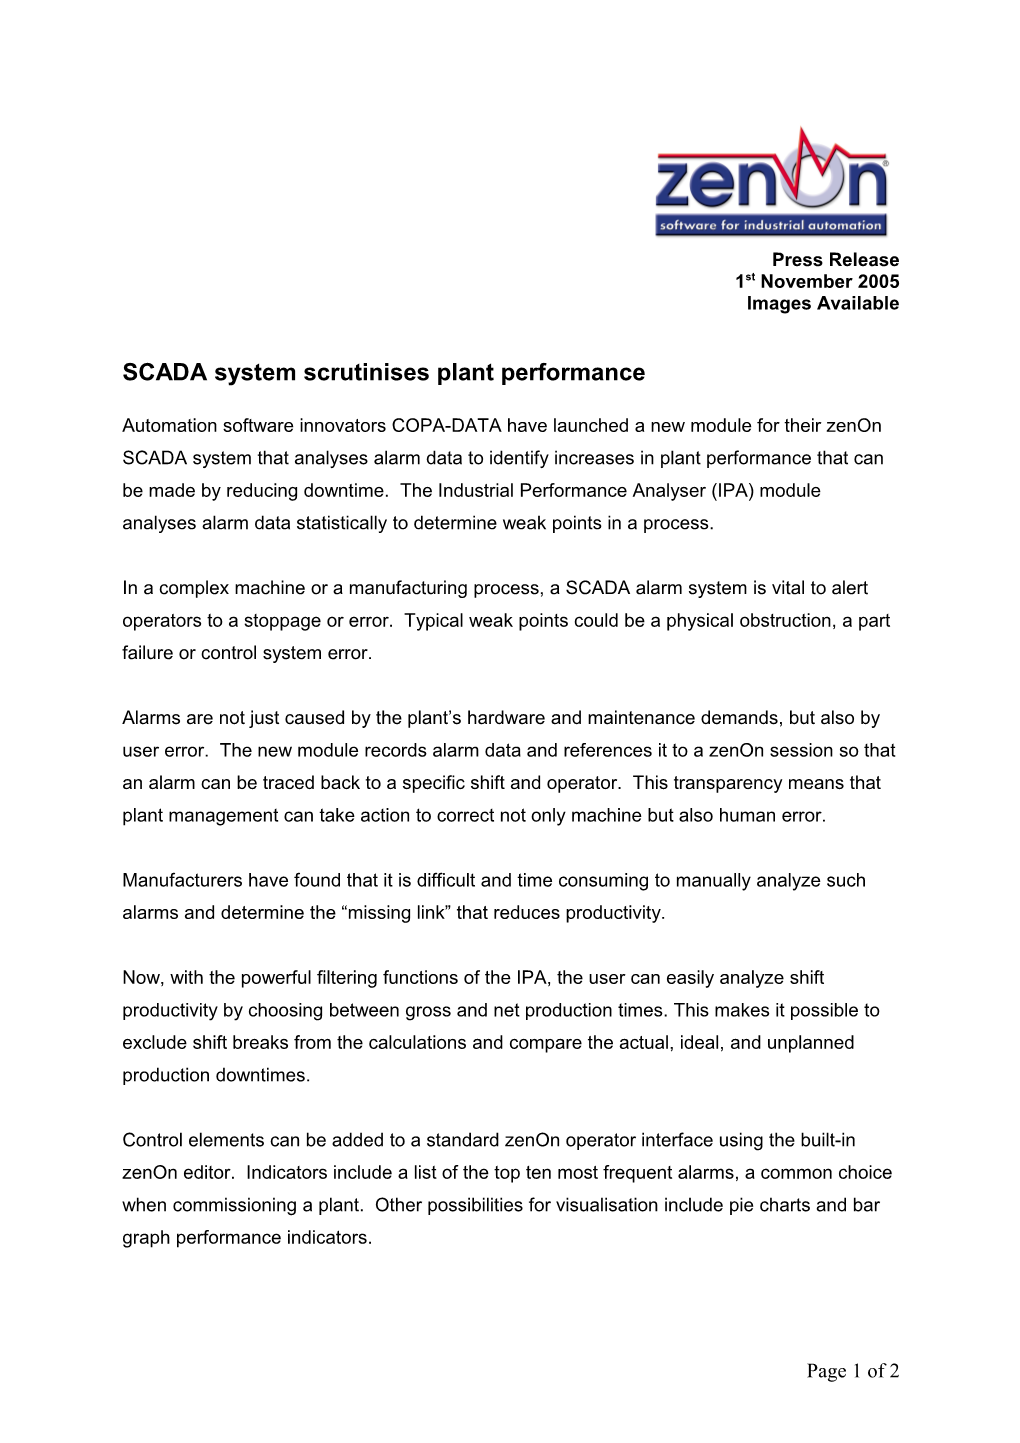 COPA-DATA PR: SCADA System Scrutinises Plant Performance